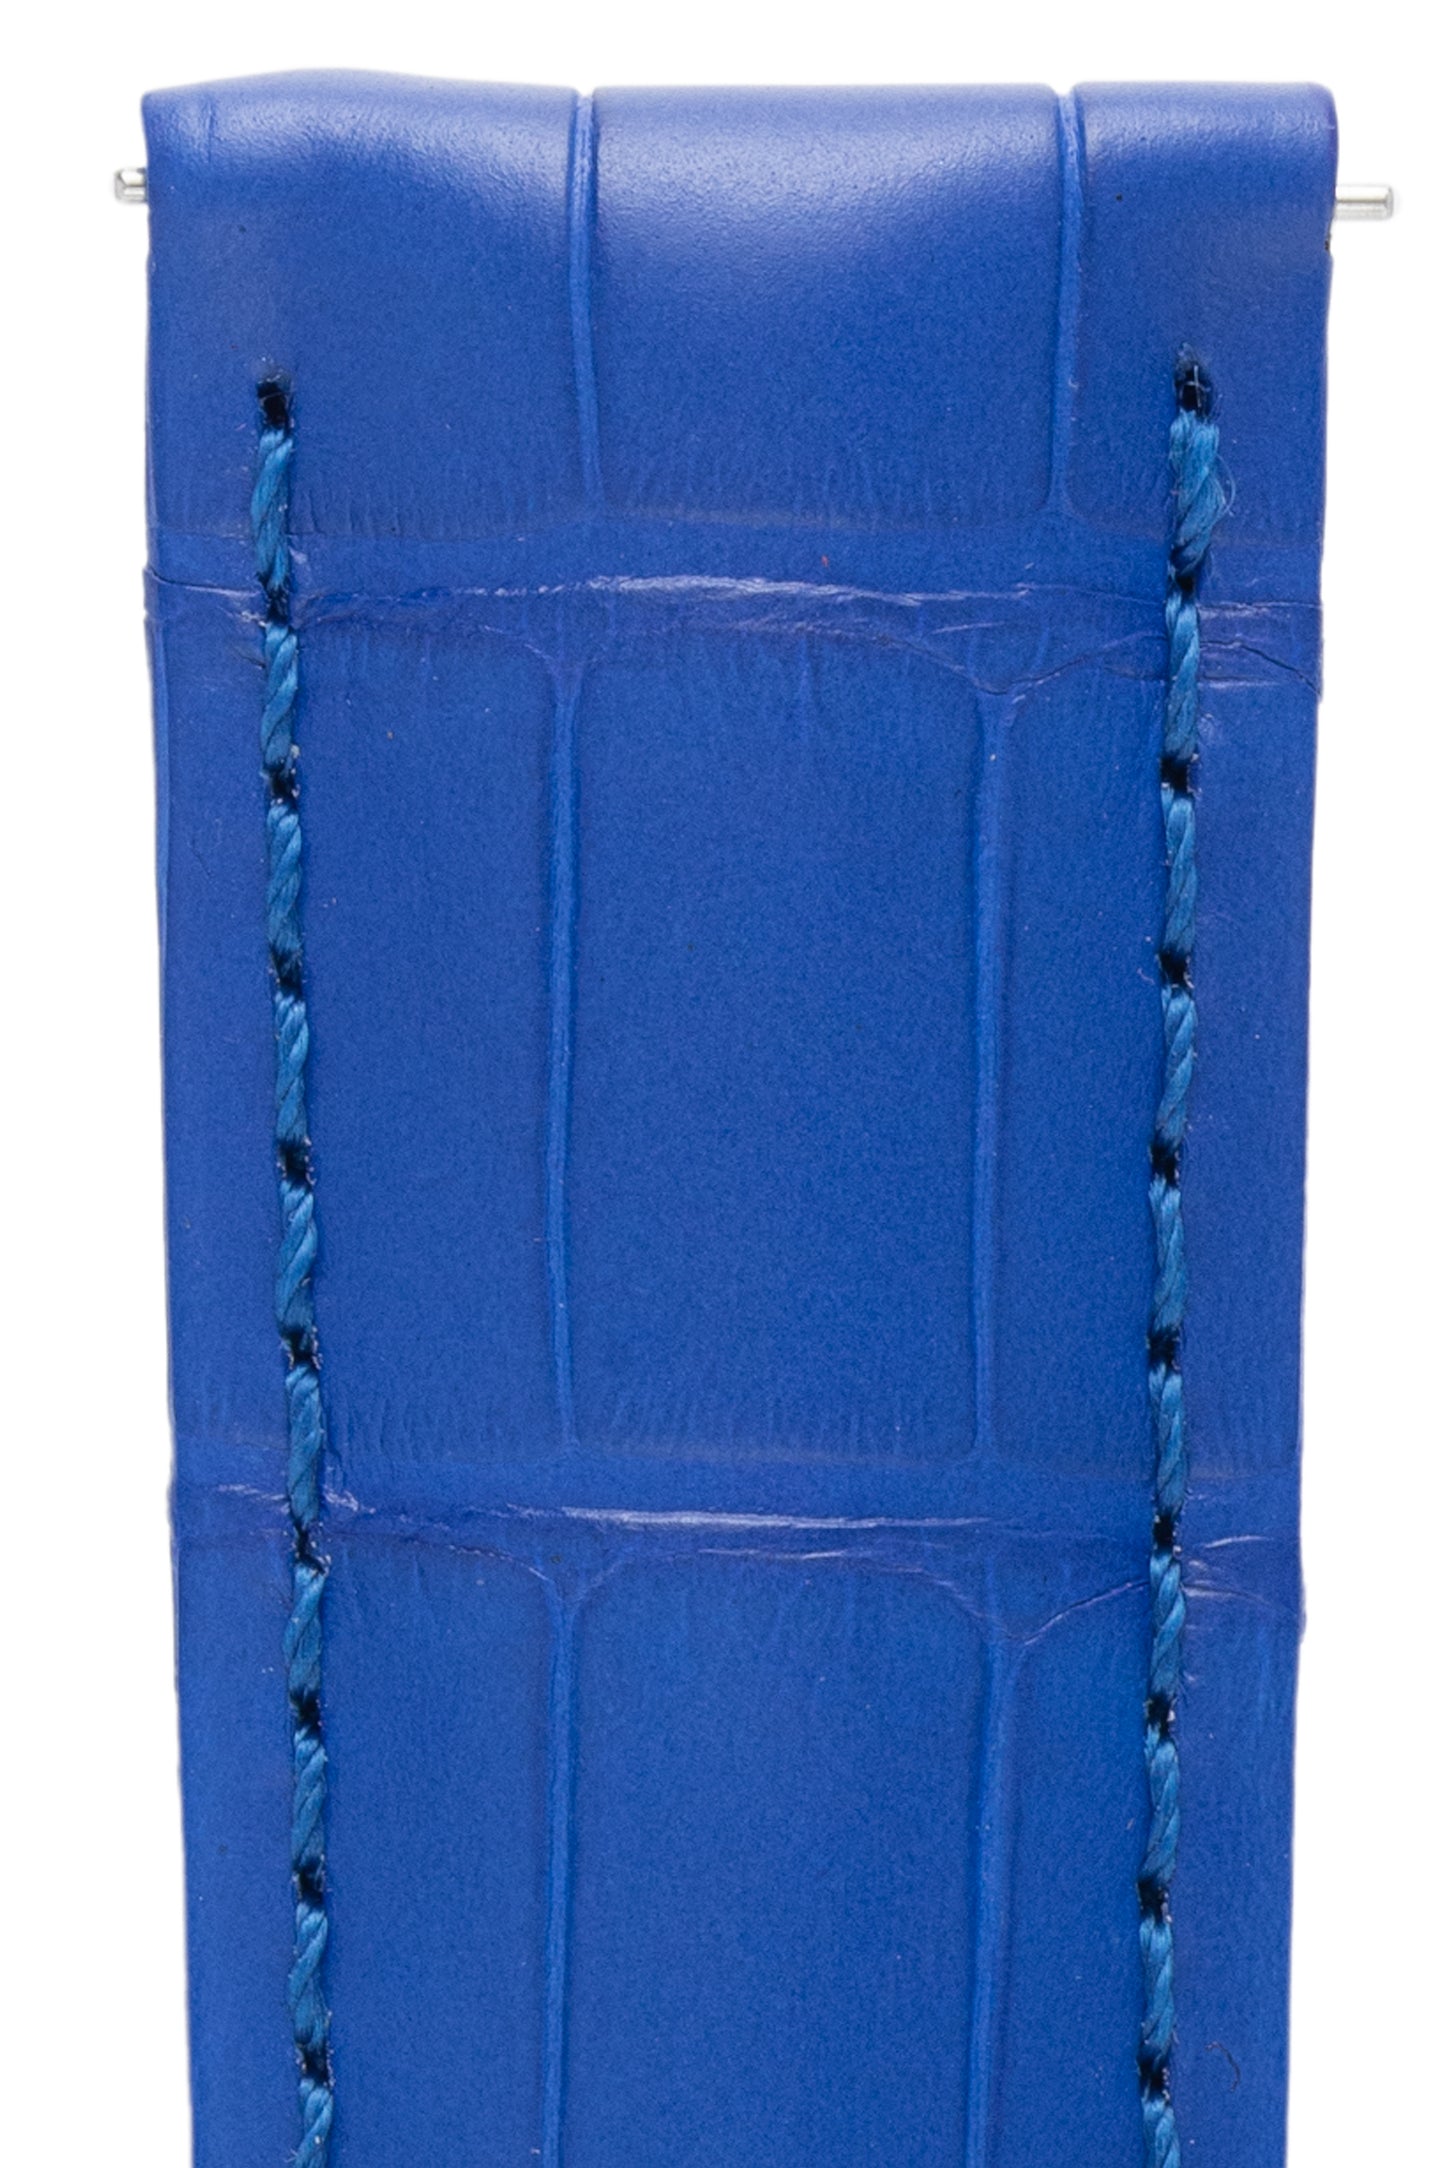 Hirsch TRITONE Padded Alligator Leather Watch Strap in ROYAL BLUE